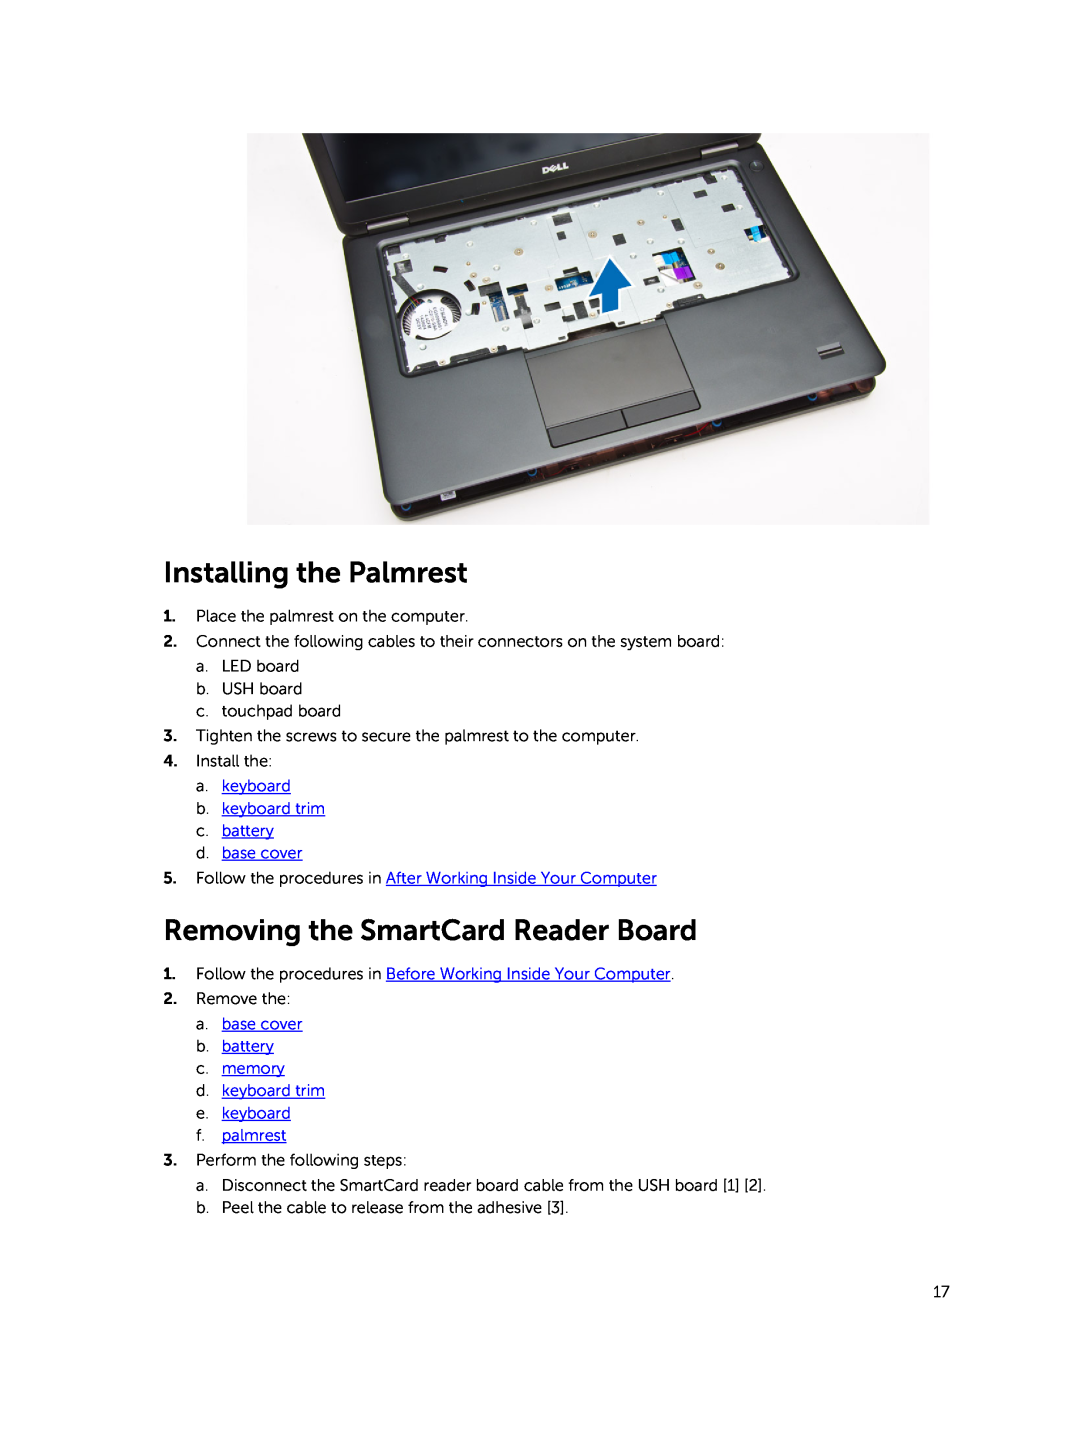 Dell E5450 owner manual Installing the Palmrest, Removing the SmartCard Reader Board 